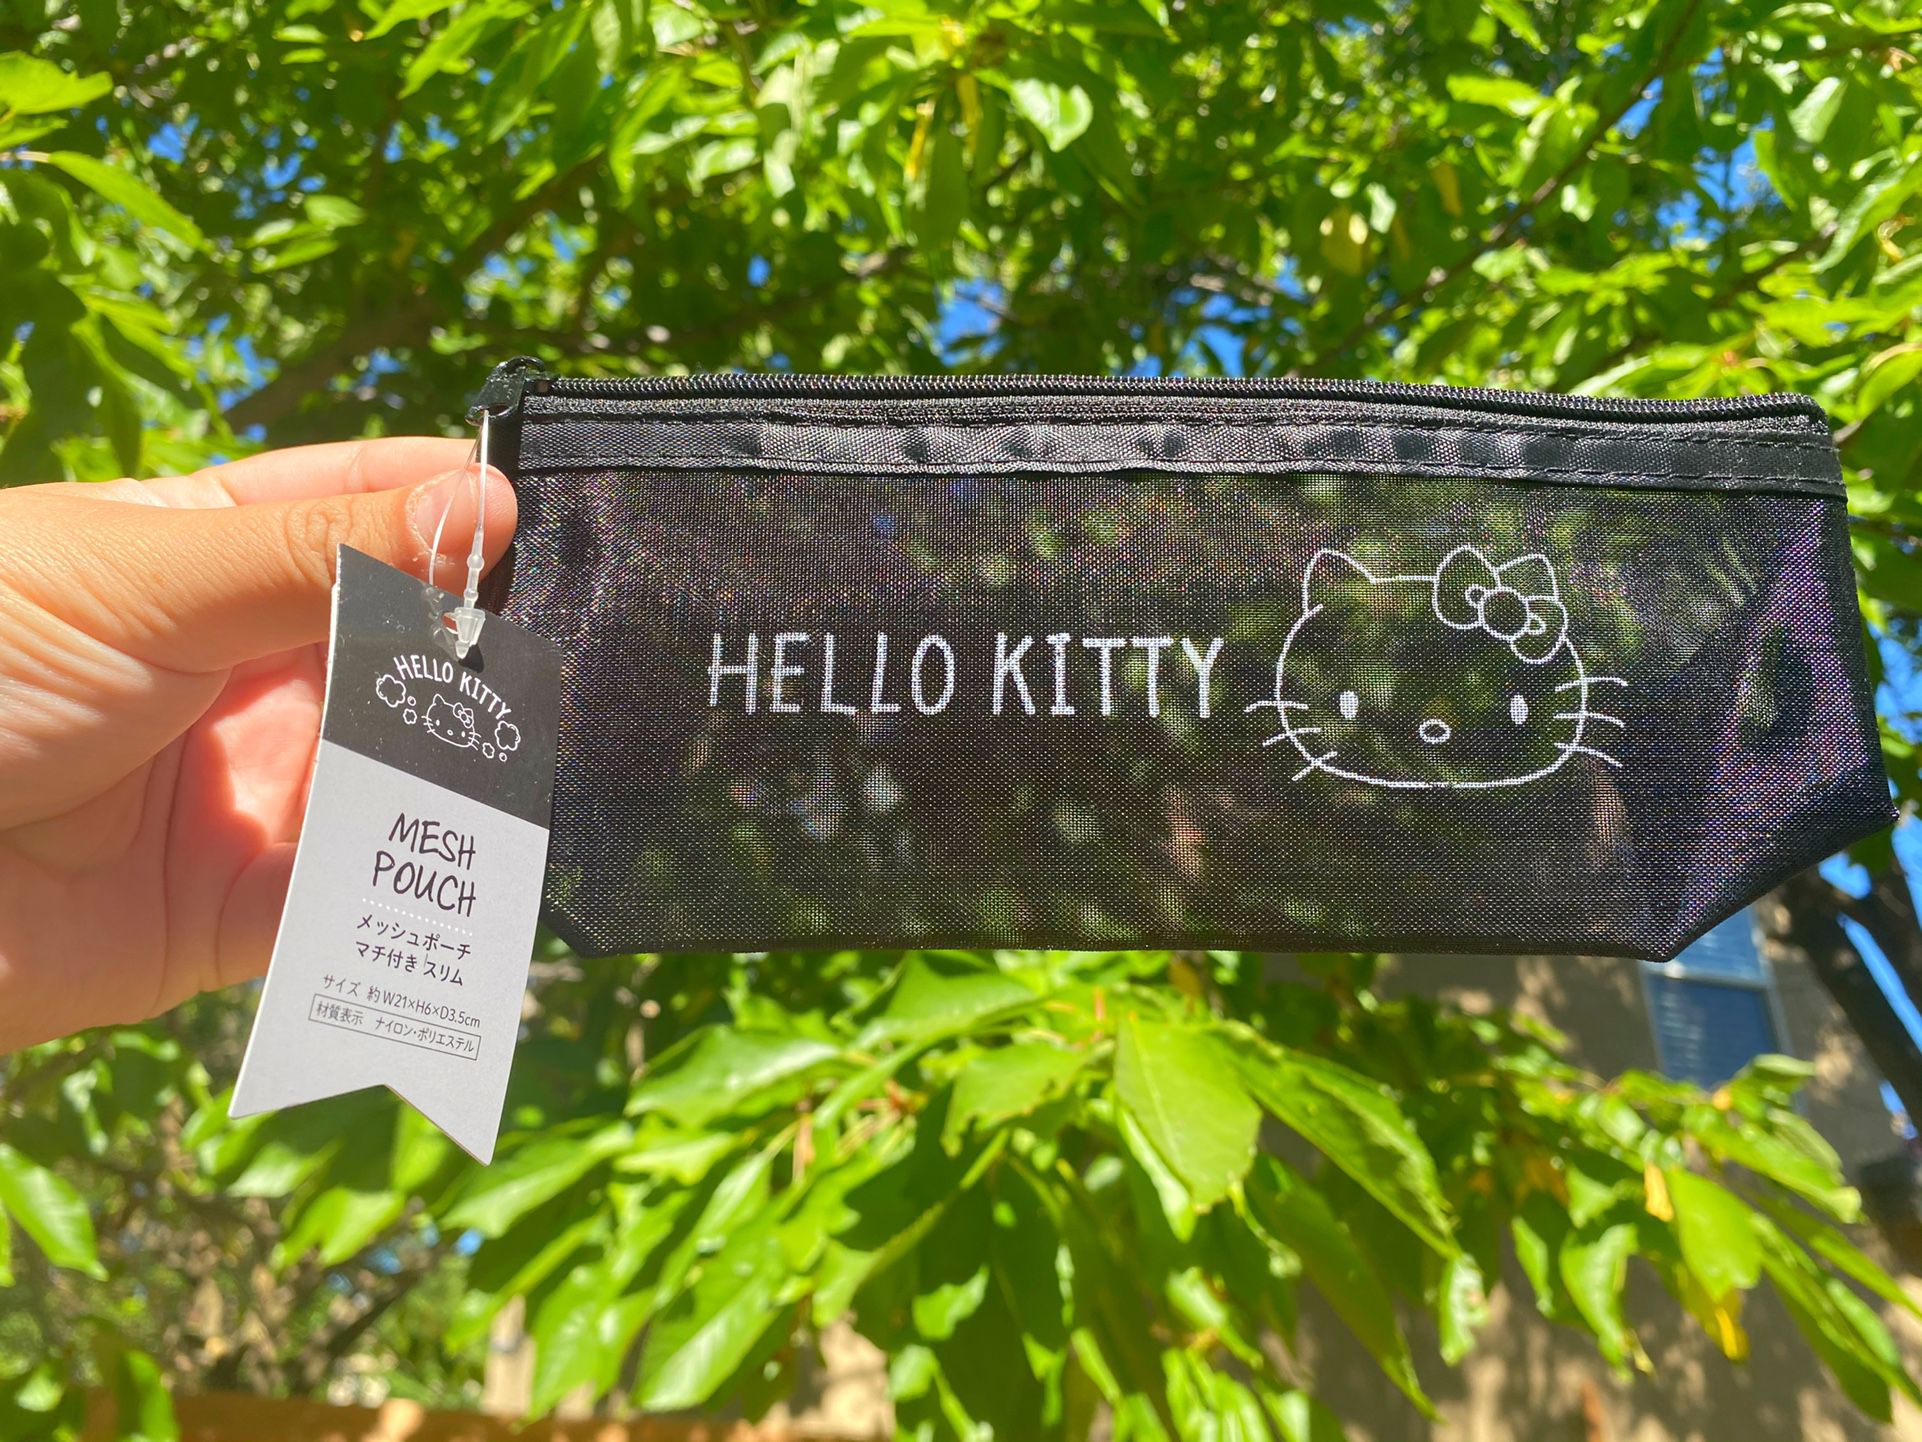 Hello Kitty Mesh Pouch